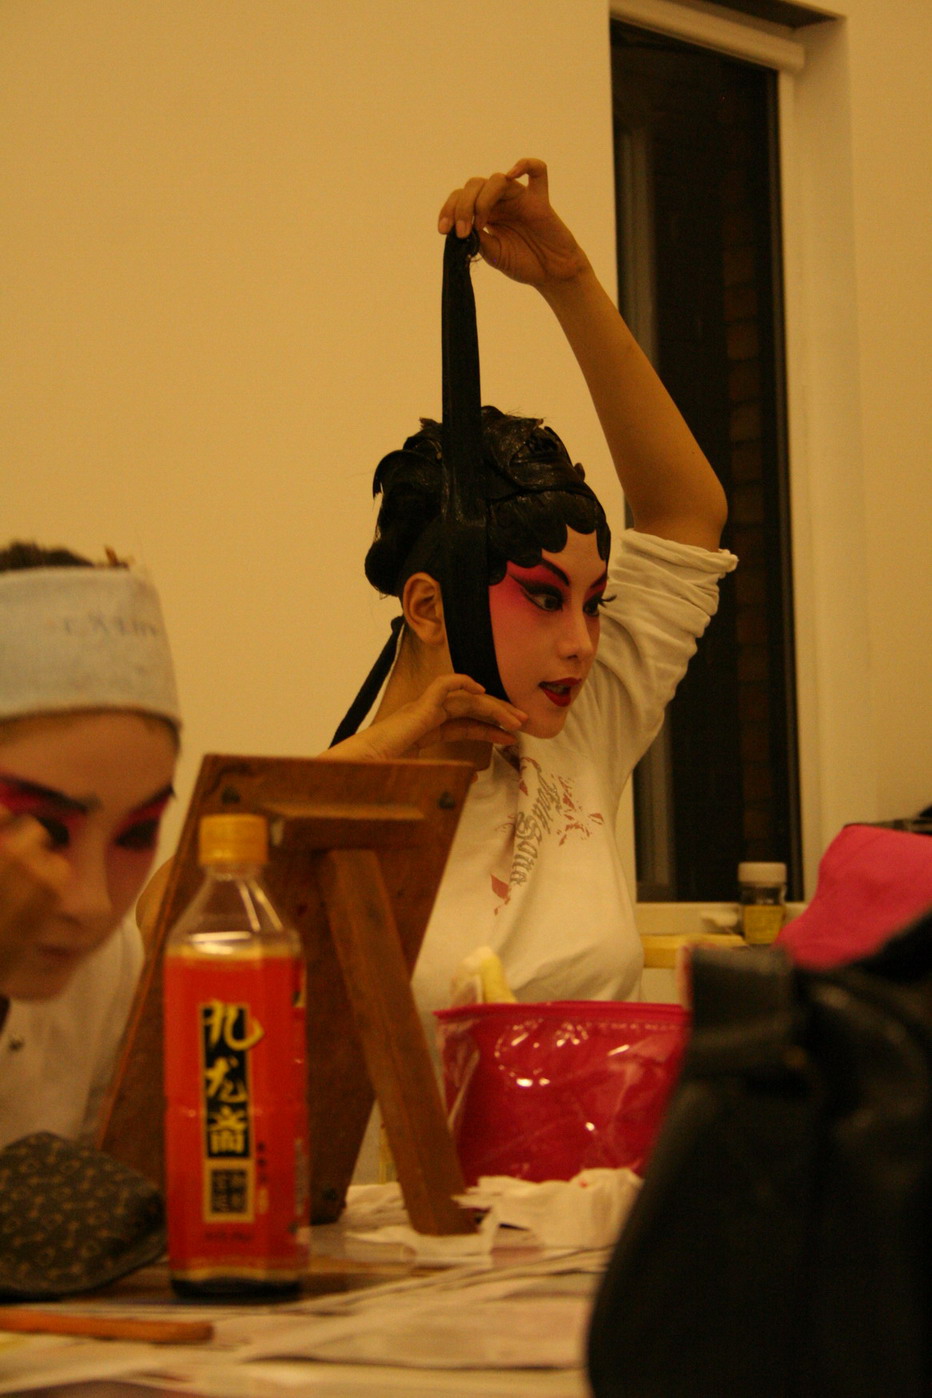 Our last event, a Mid-Autumn Festival kunqu opera night